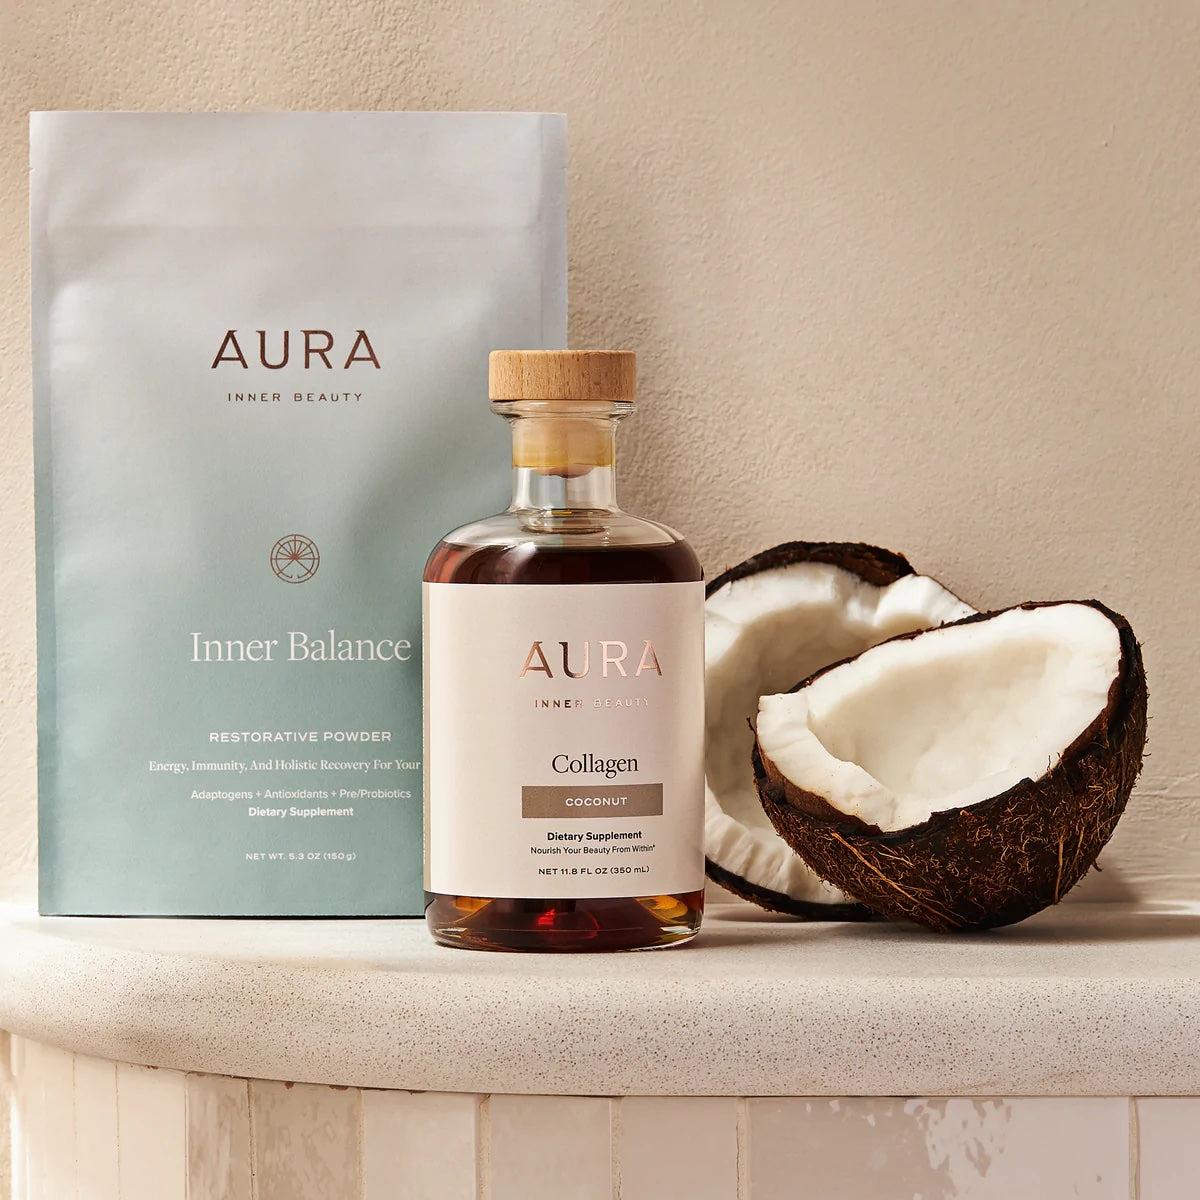 AURA Inner Beauty | Inner Balance Restorative Powder